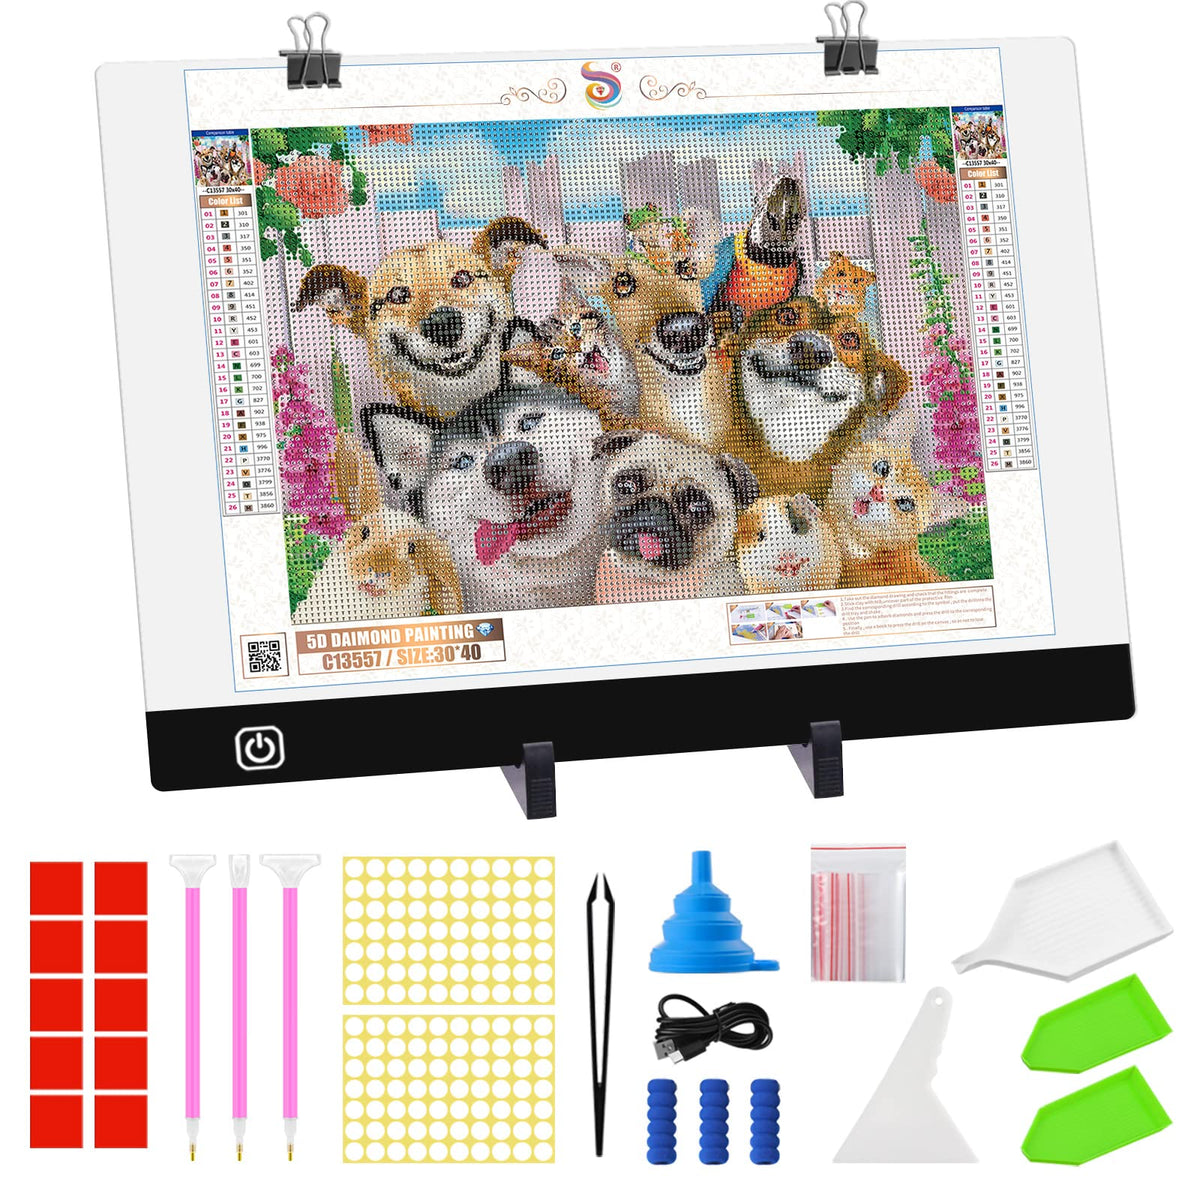  A3 LED Light Pad For Diamond Painting,Ratukall Diamond Art  Light Board Kit,Adjustable Brightness Light Box For Tracing